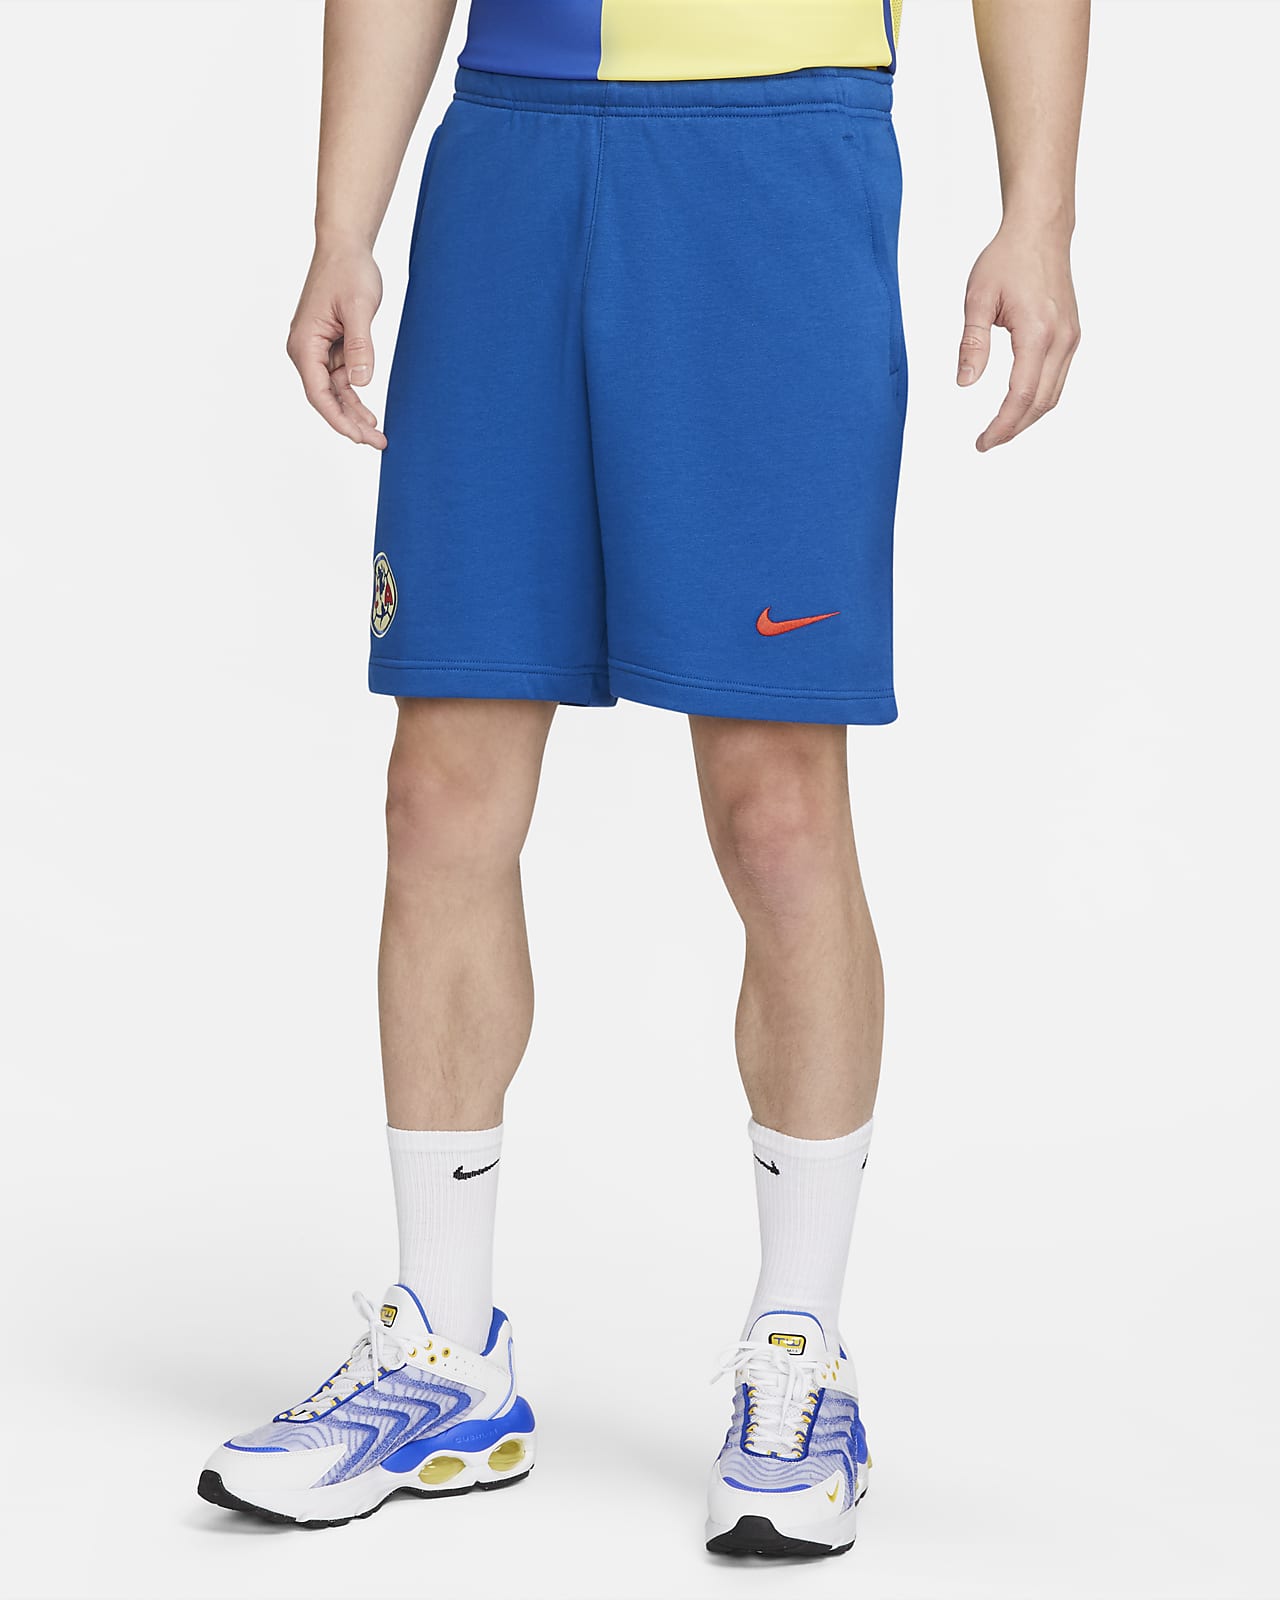 Shorts de fútbol Nike para hombre Club América